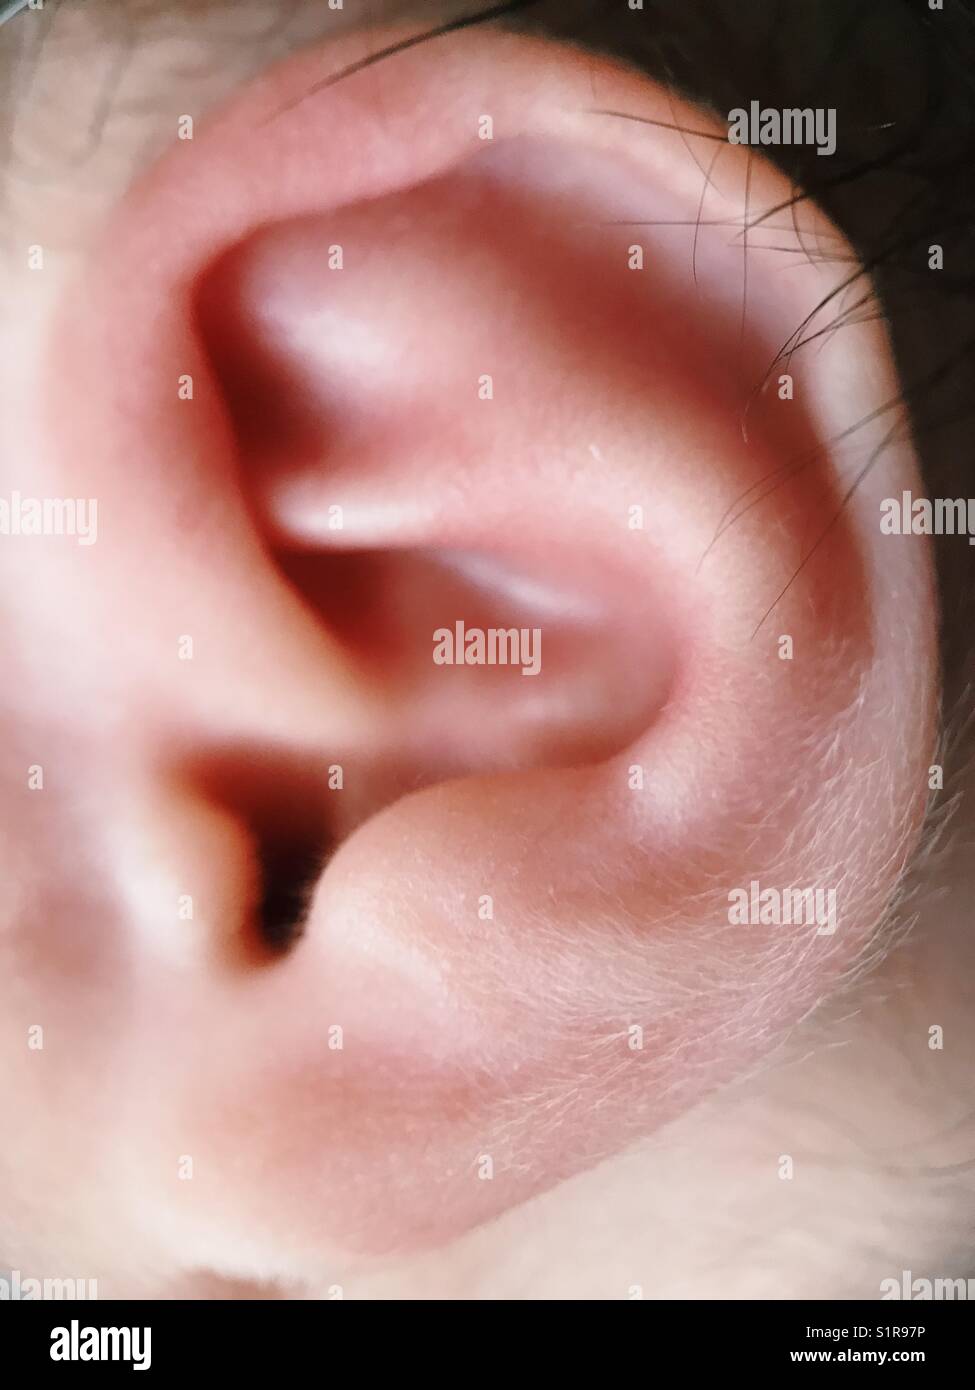 Macro photograph of a newborn baby's ear. Stock Photo